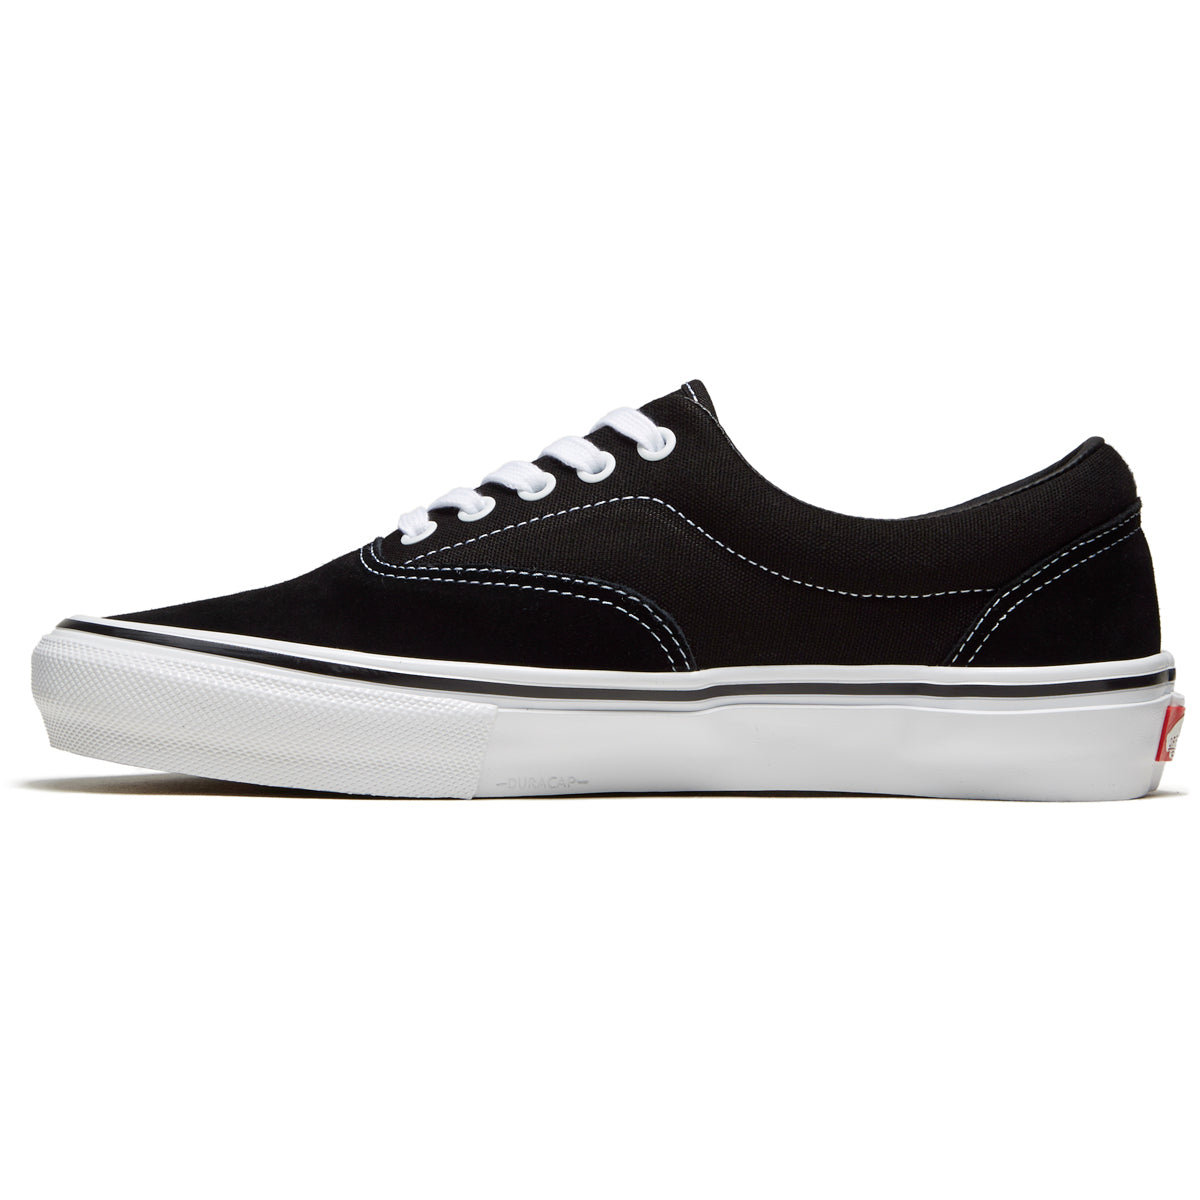 Vans Skate Era Shoes - Black/White image 2